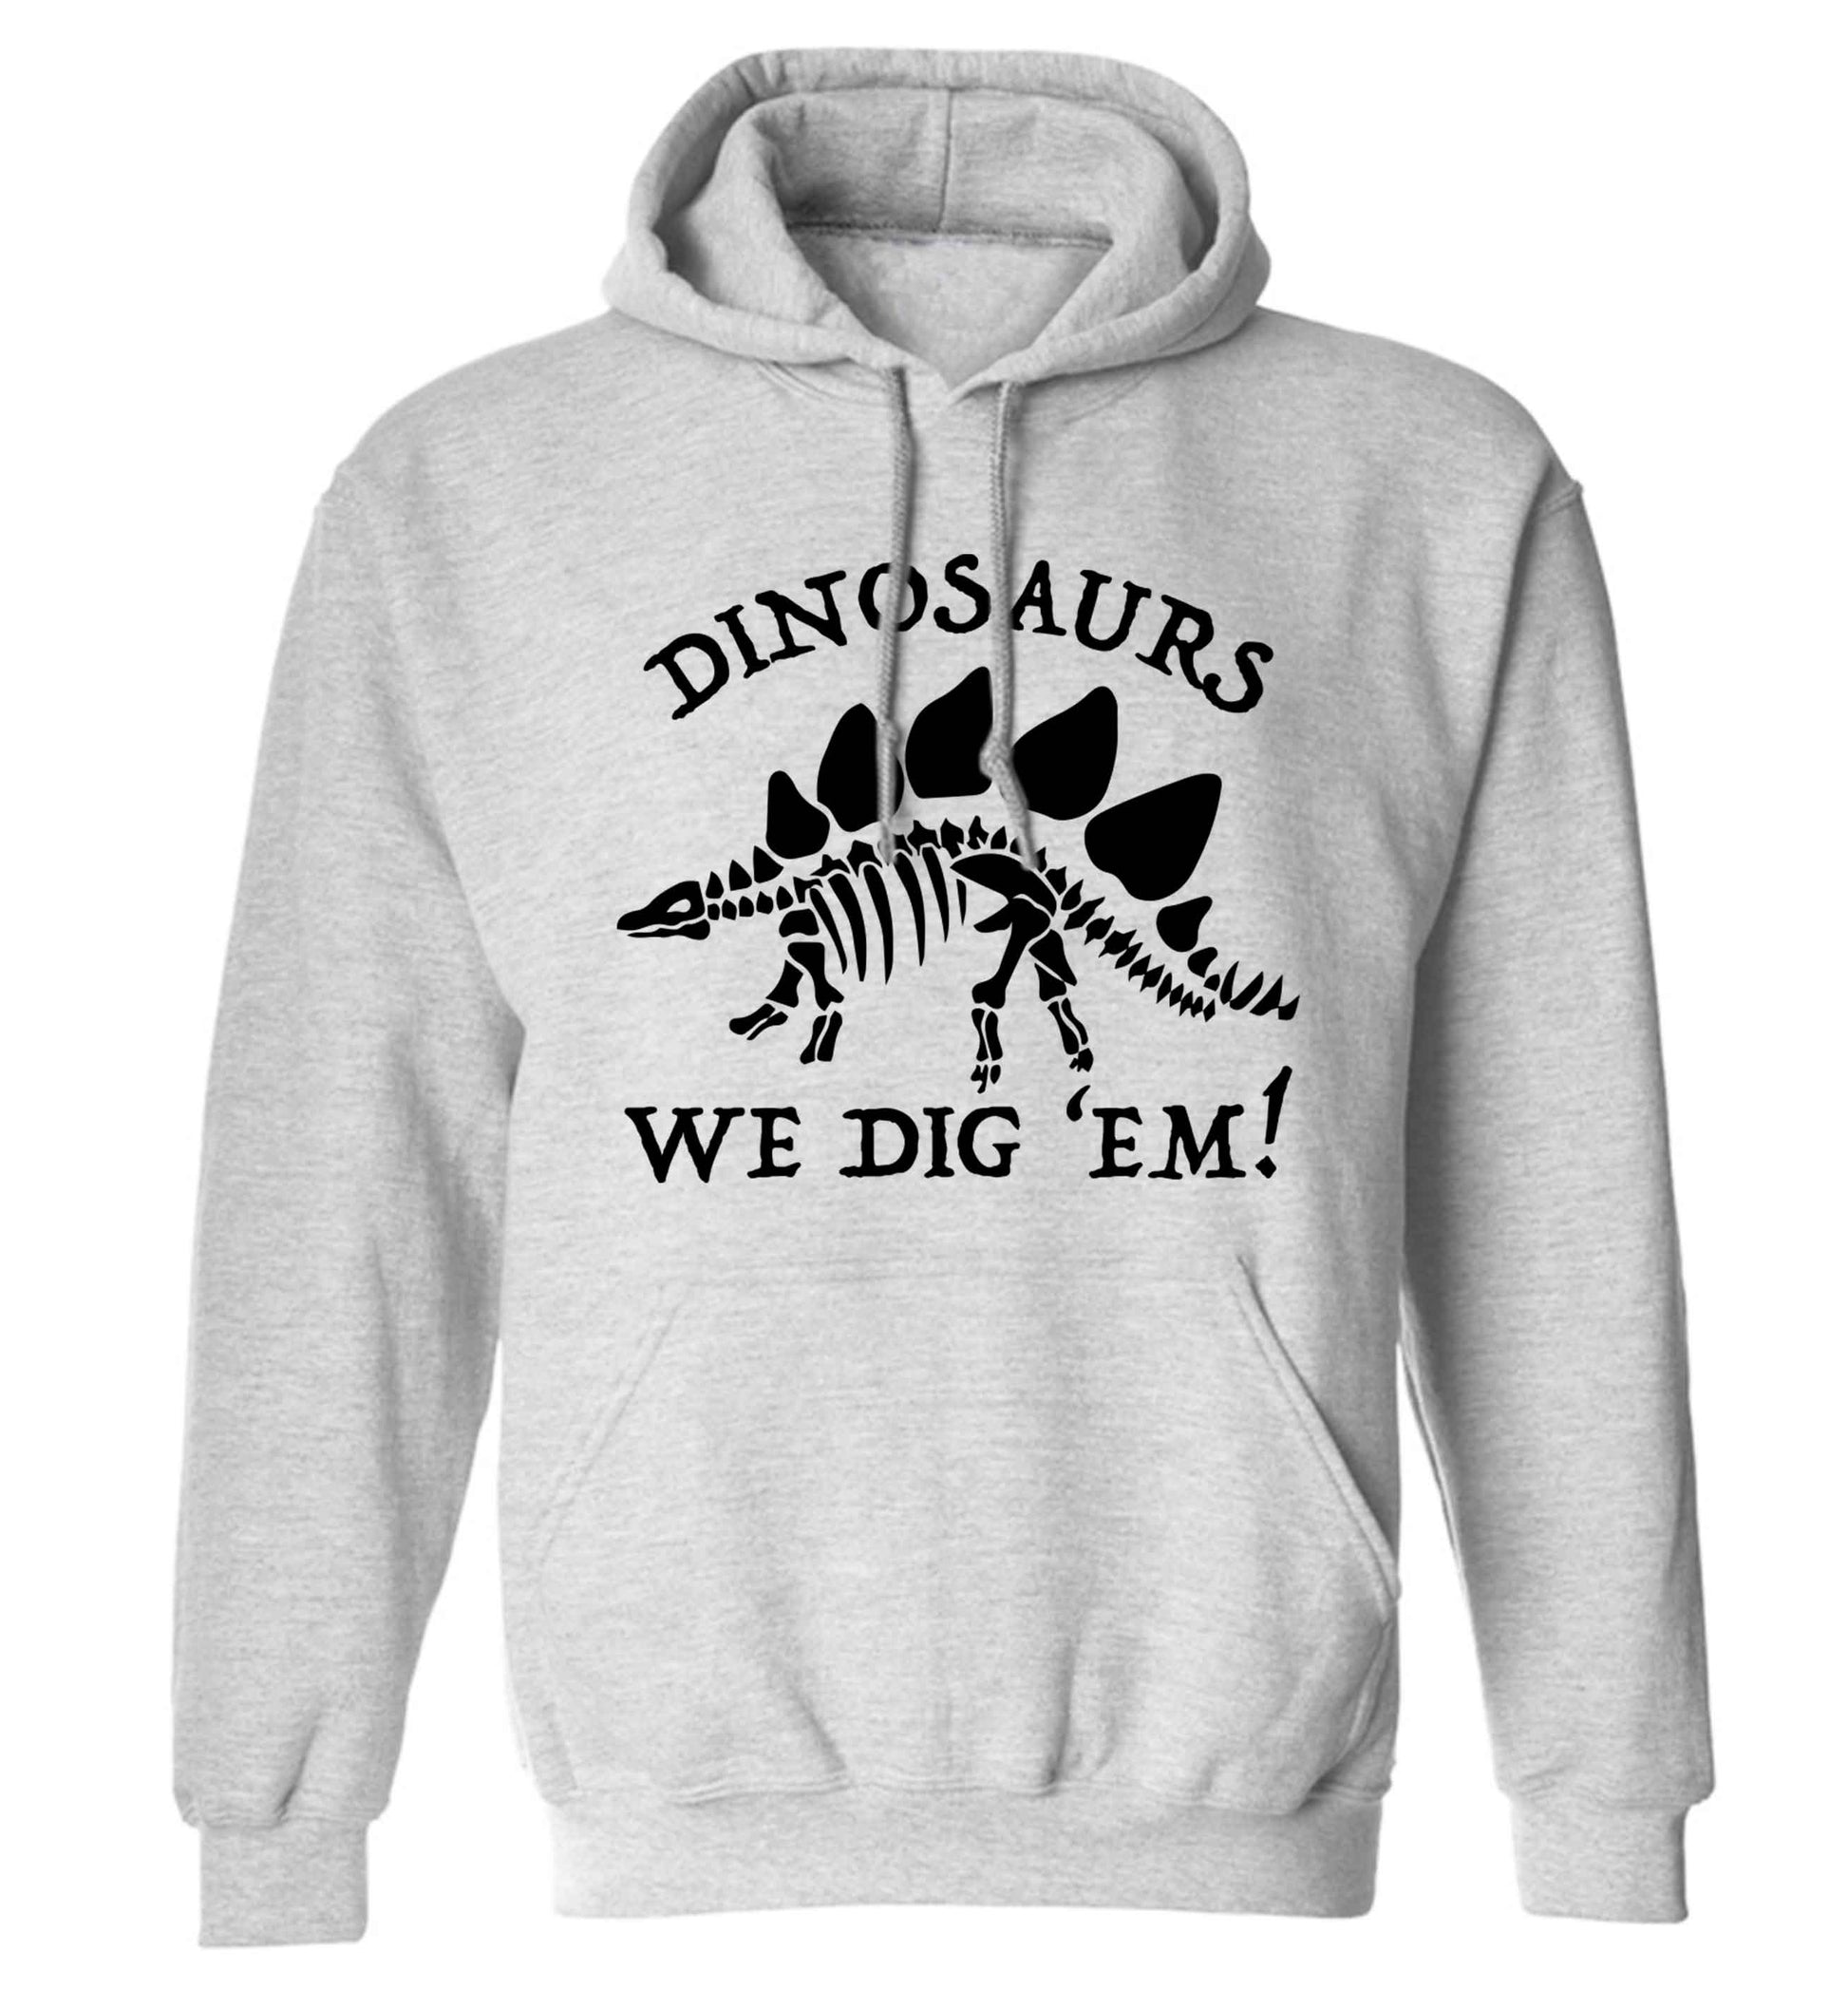 Dinosaurs we dig 'em! adults unisex grey hoodie 2XL